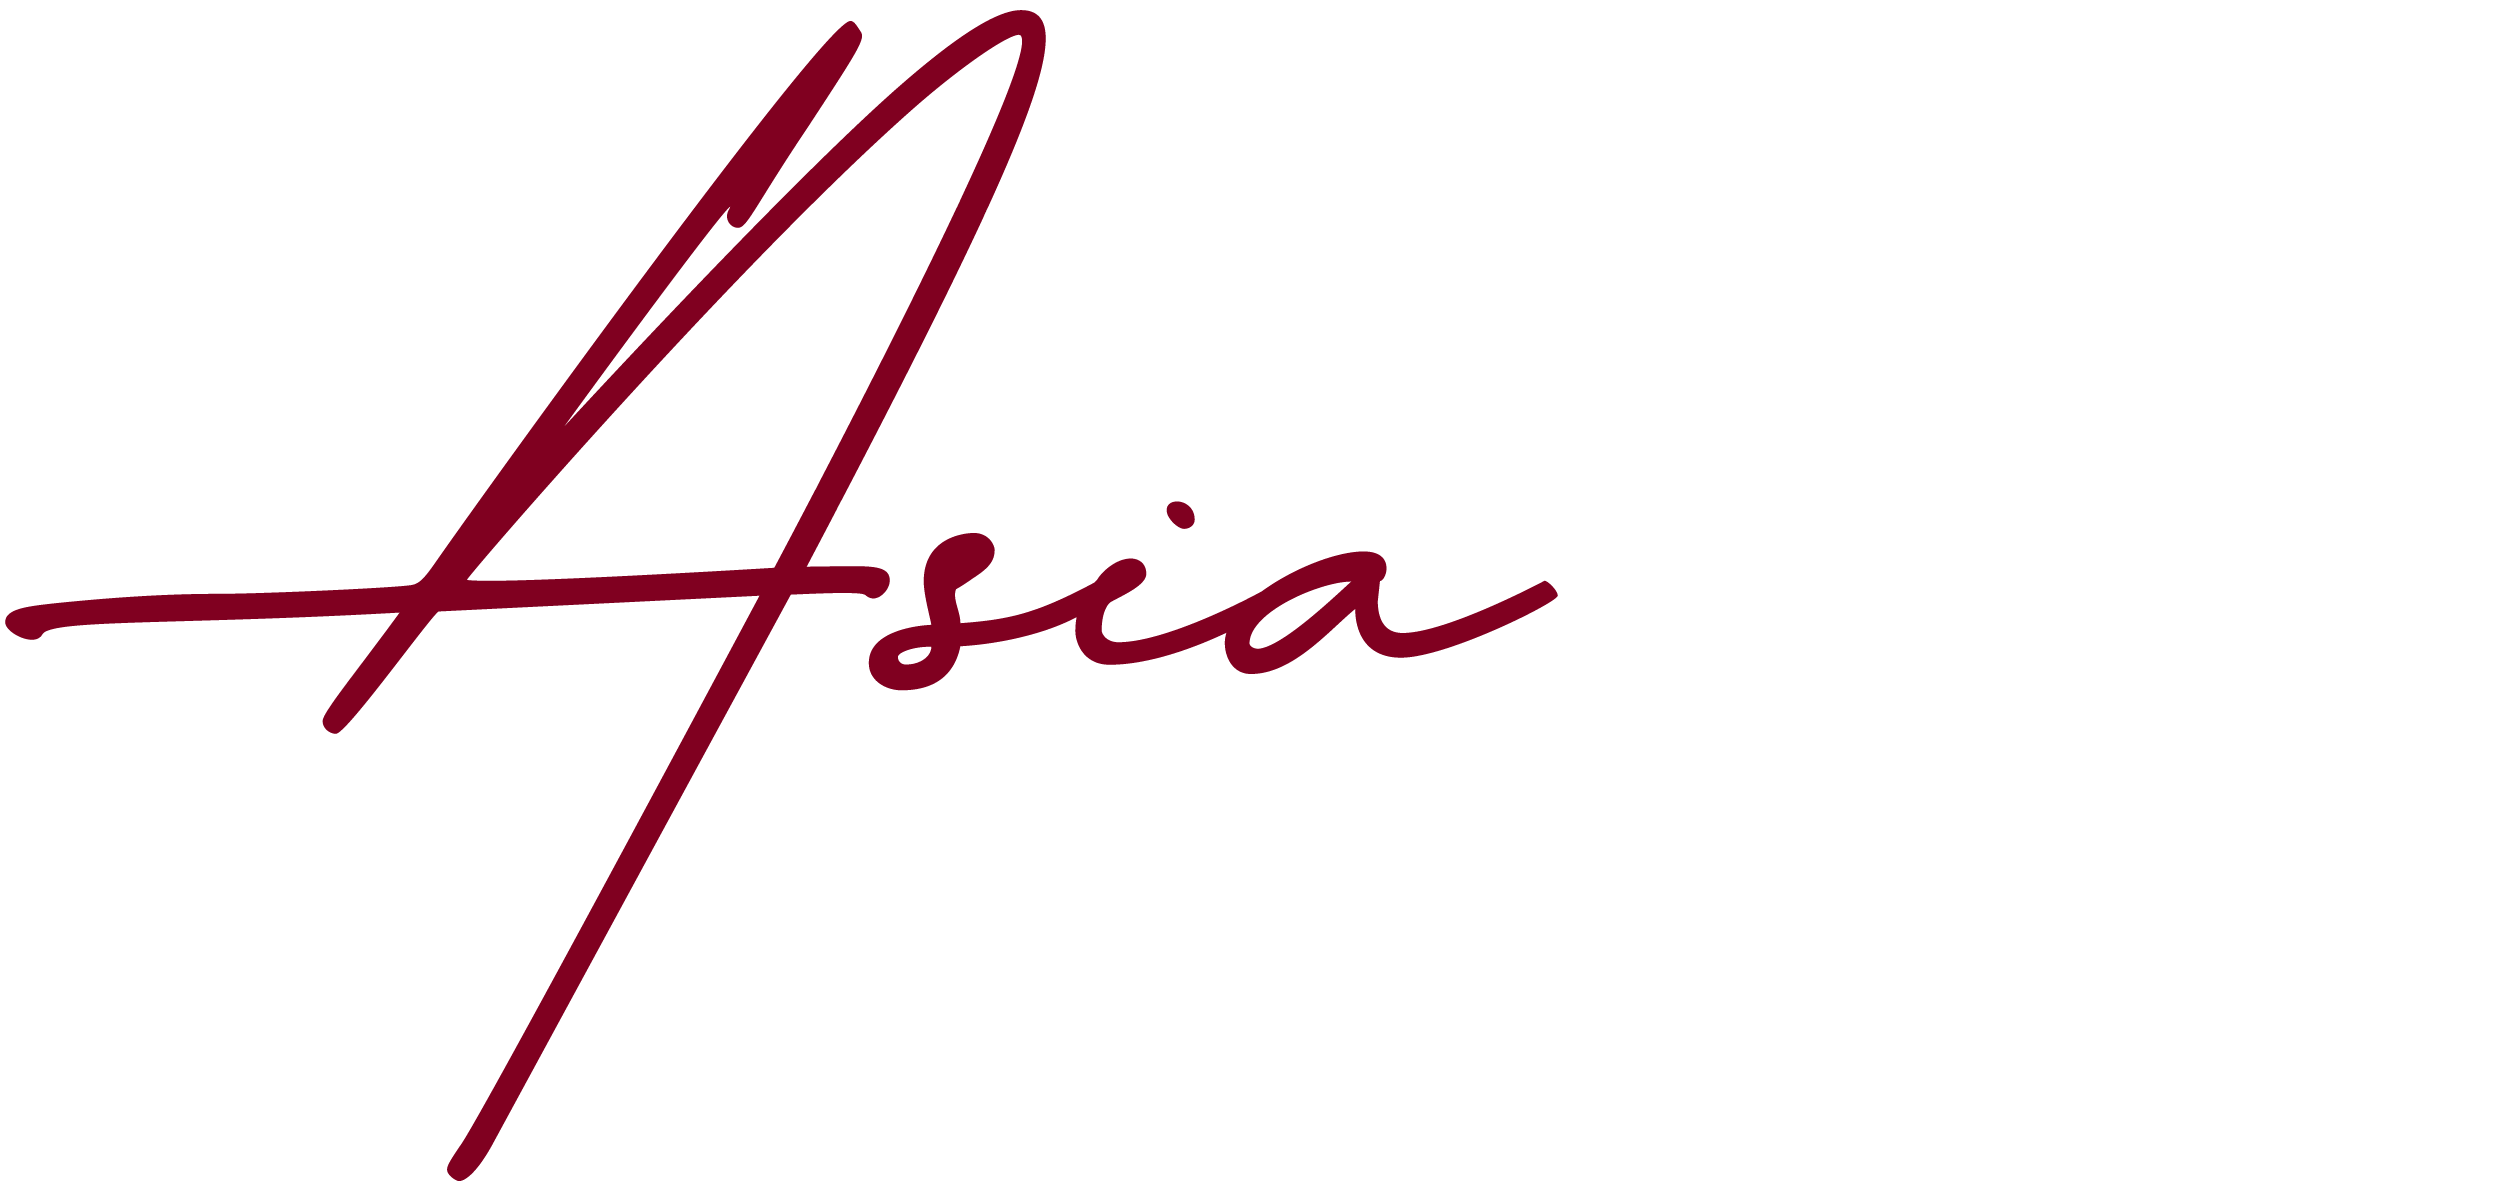 Asia Graham Realtor